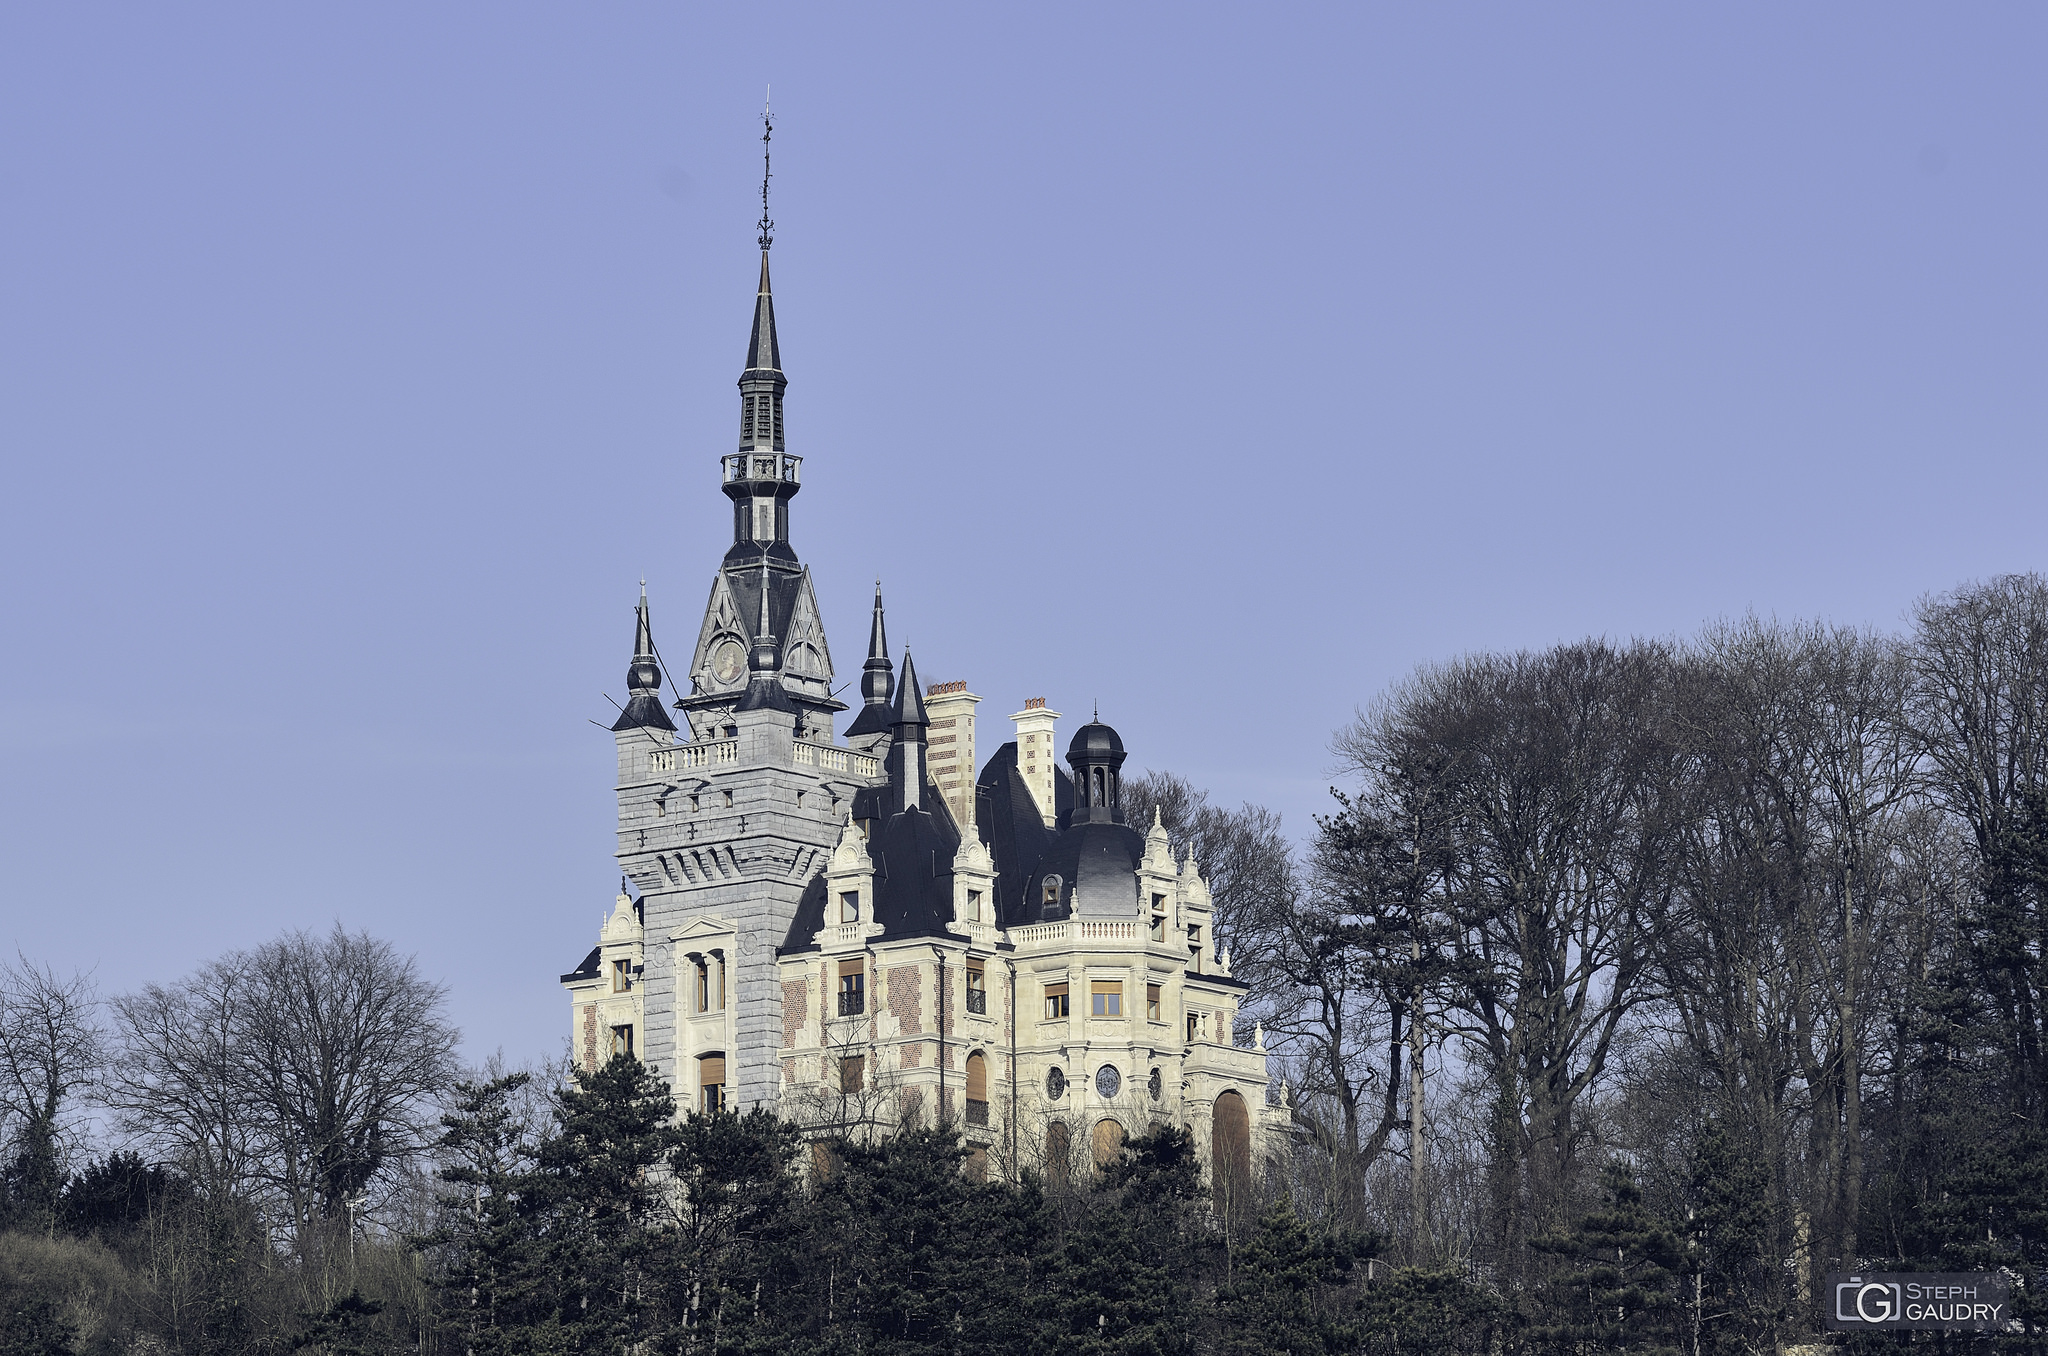 Château le Fy [Click to start slideshow]